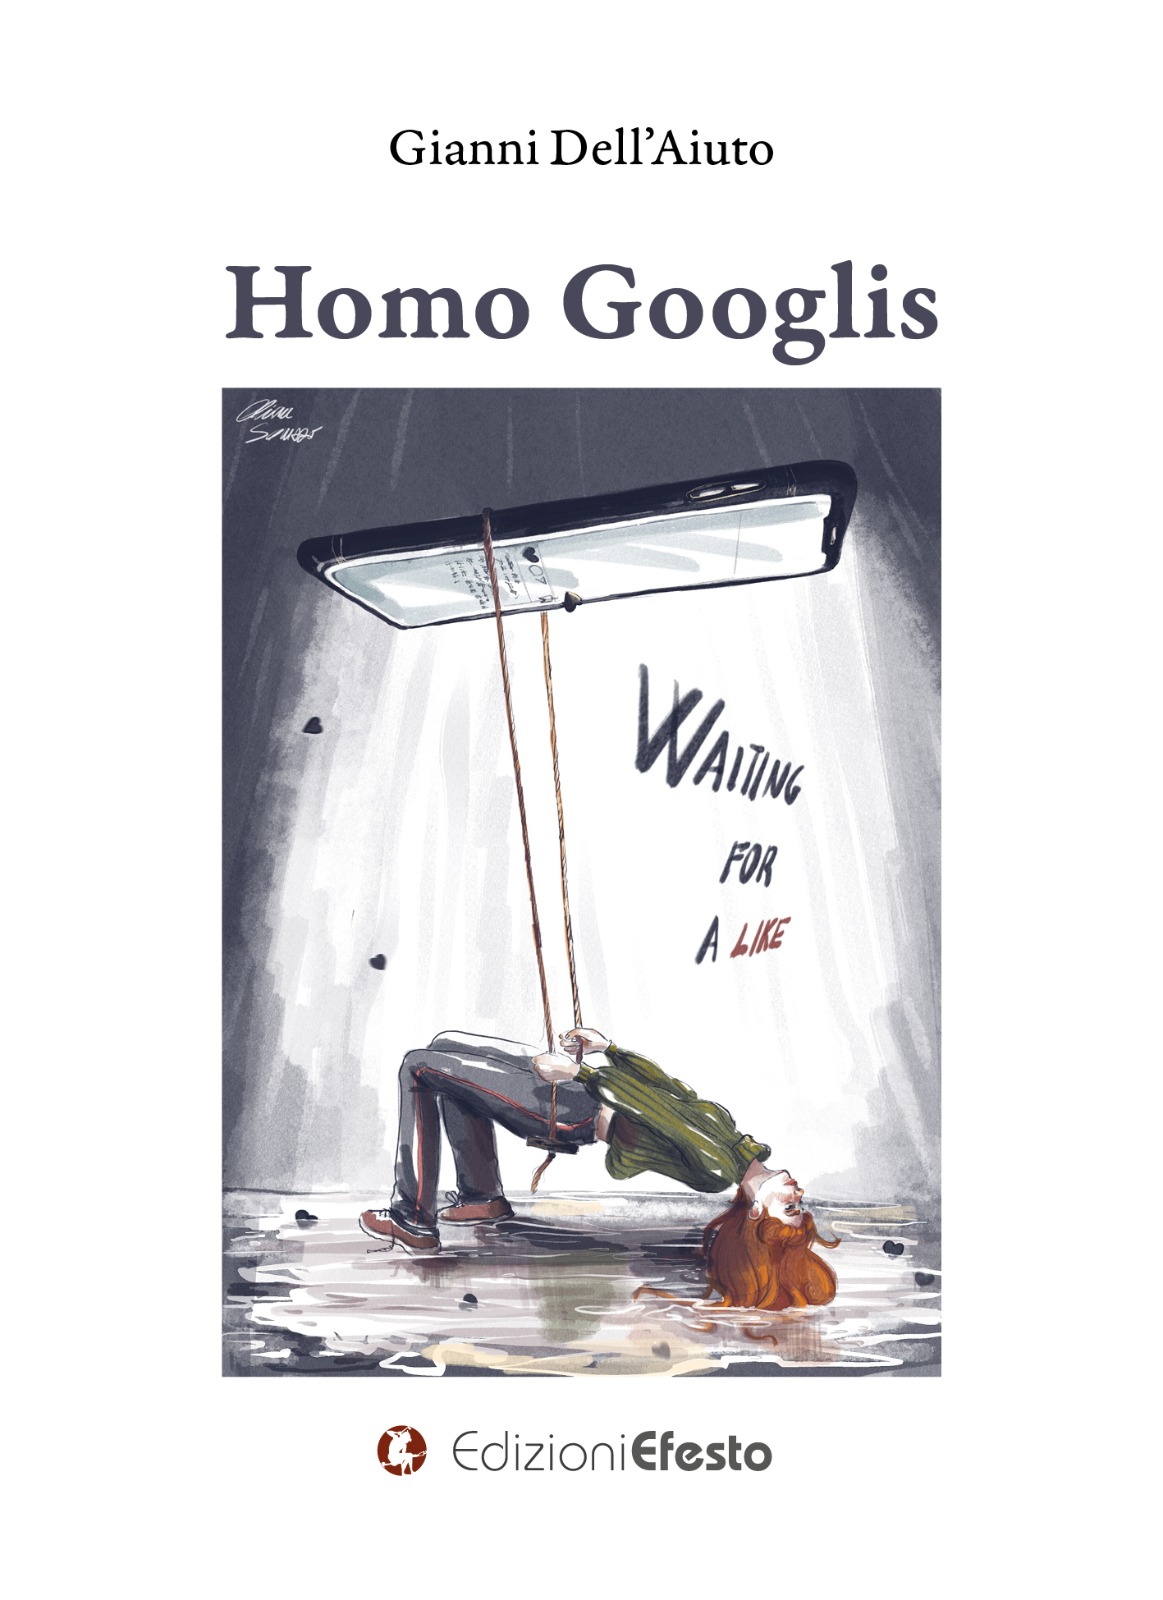 Copertina di Homo Googlis